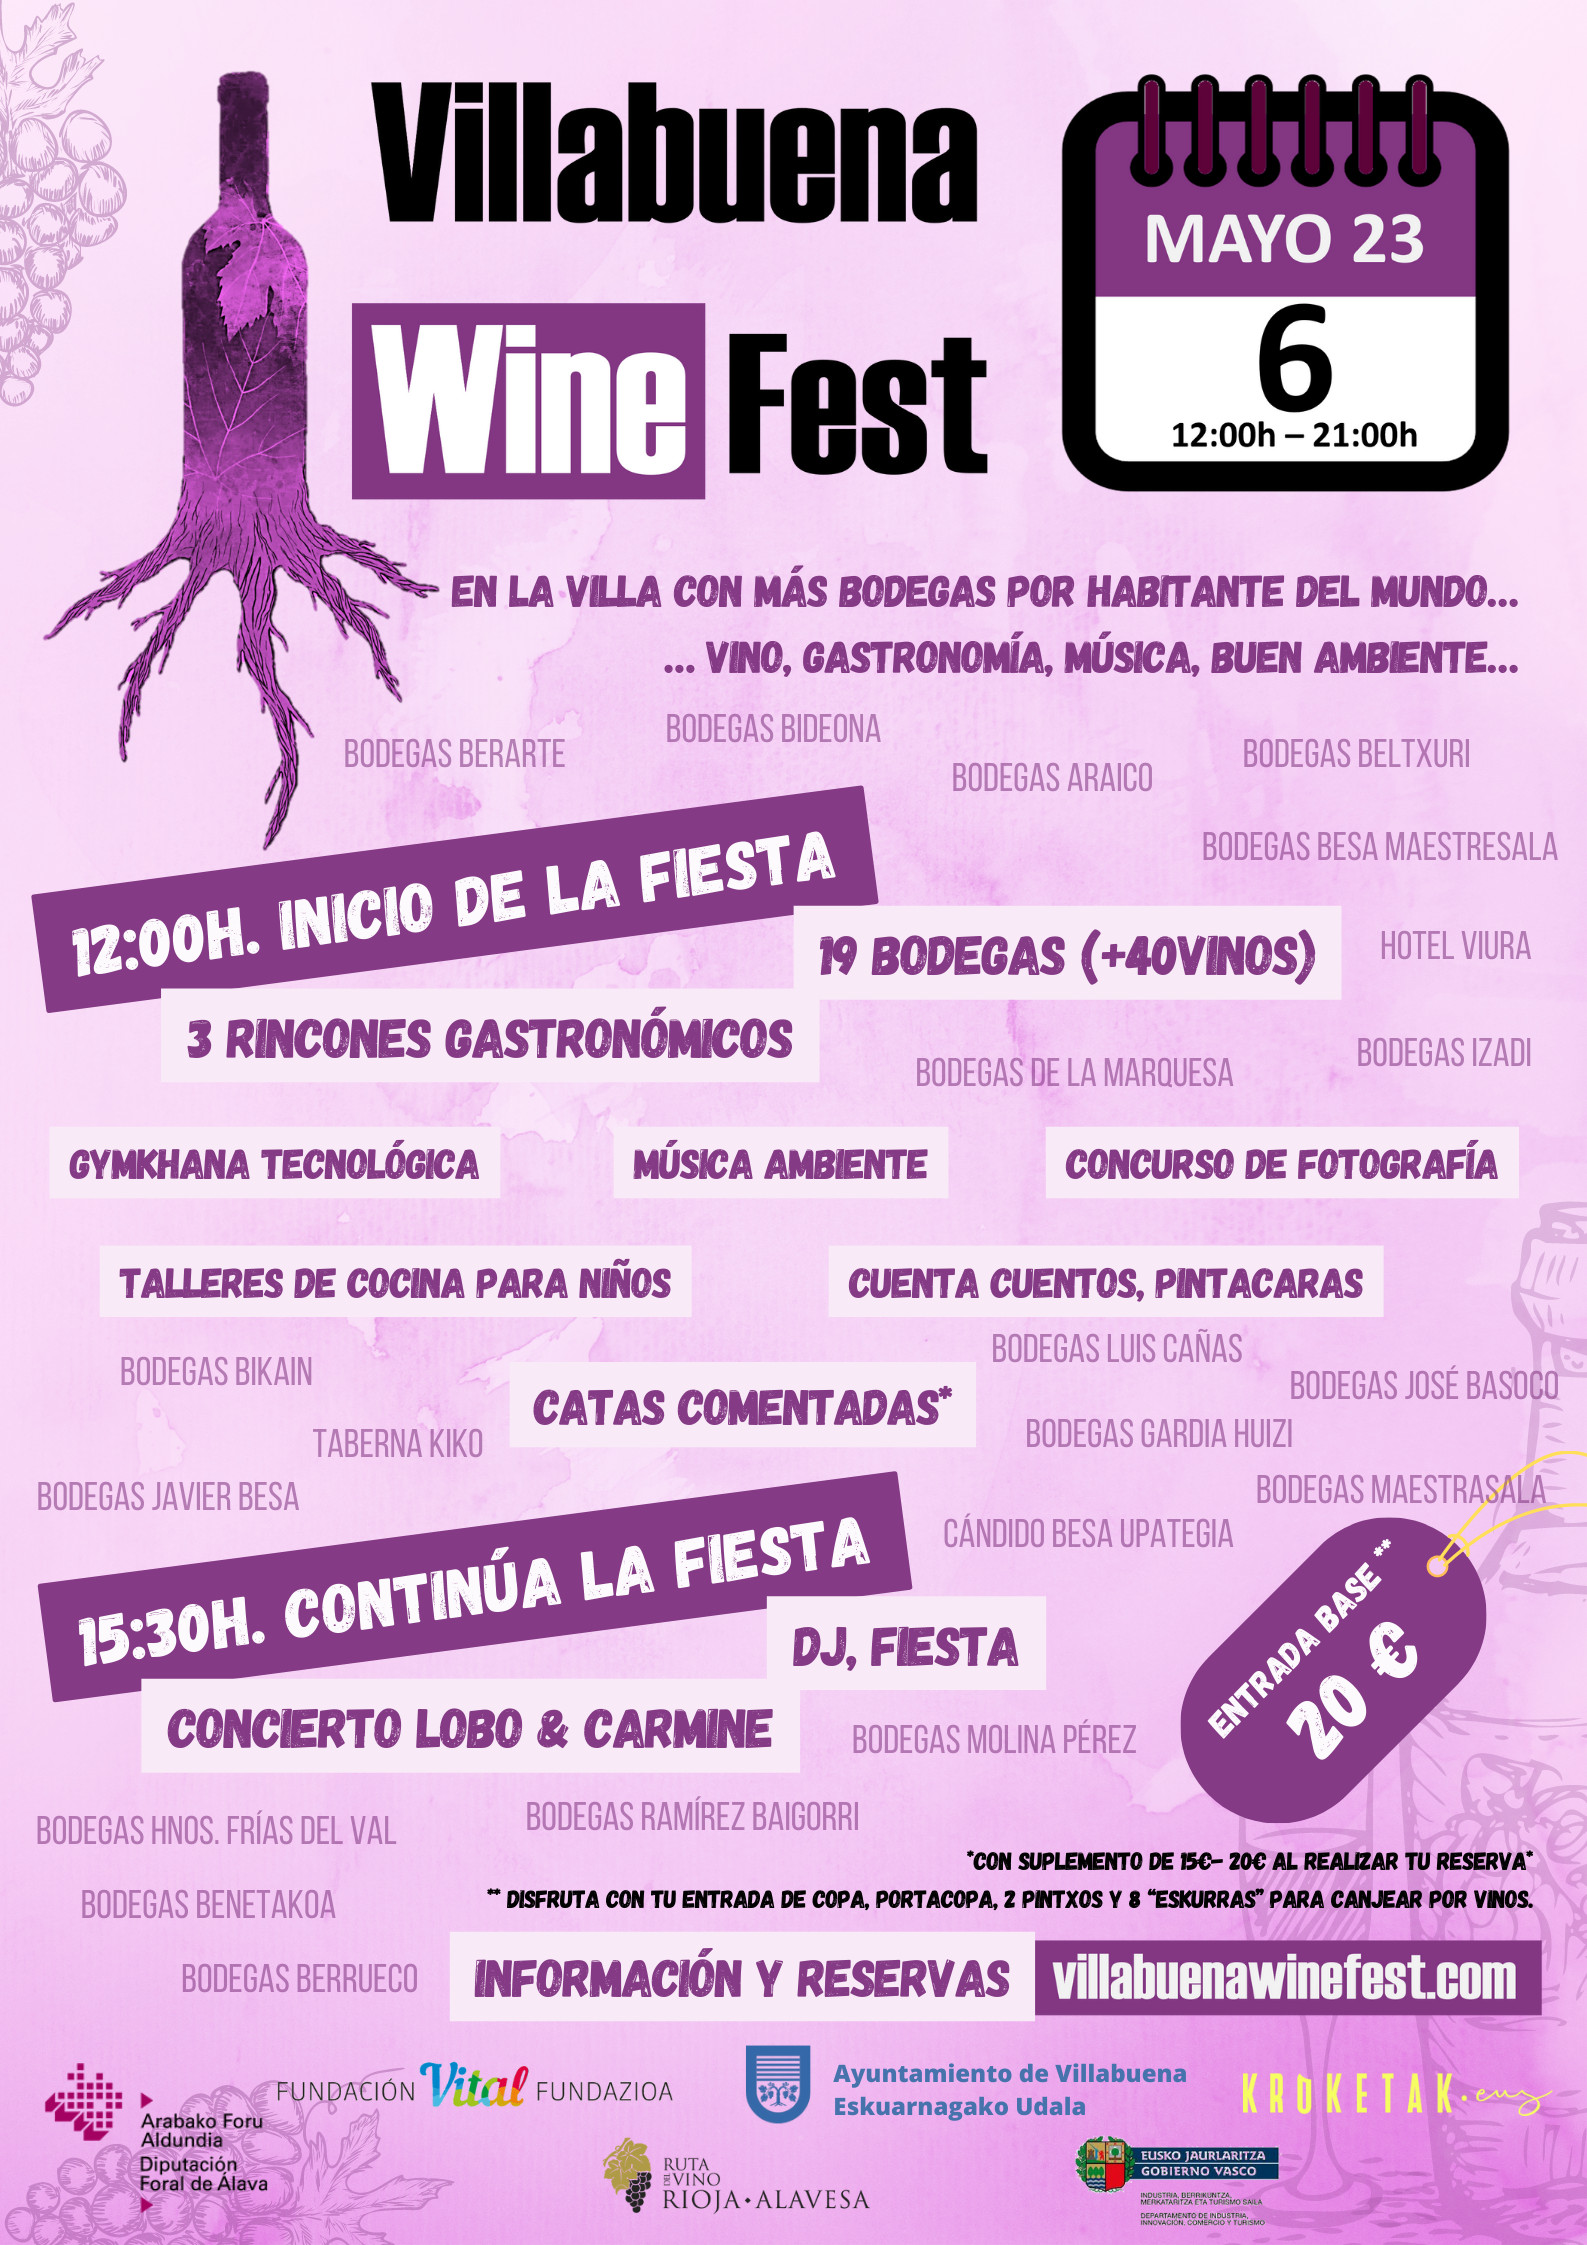 Villabuena Winefest